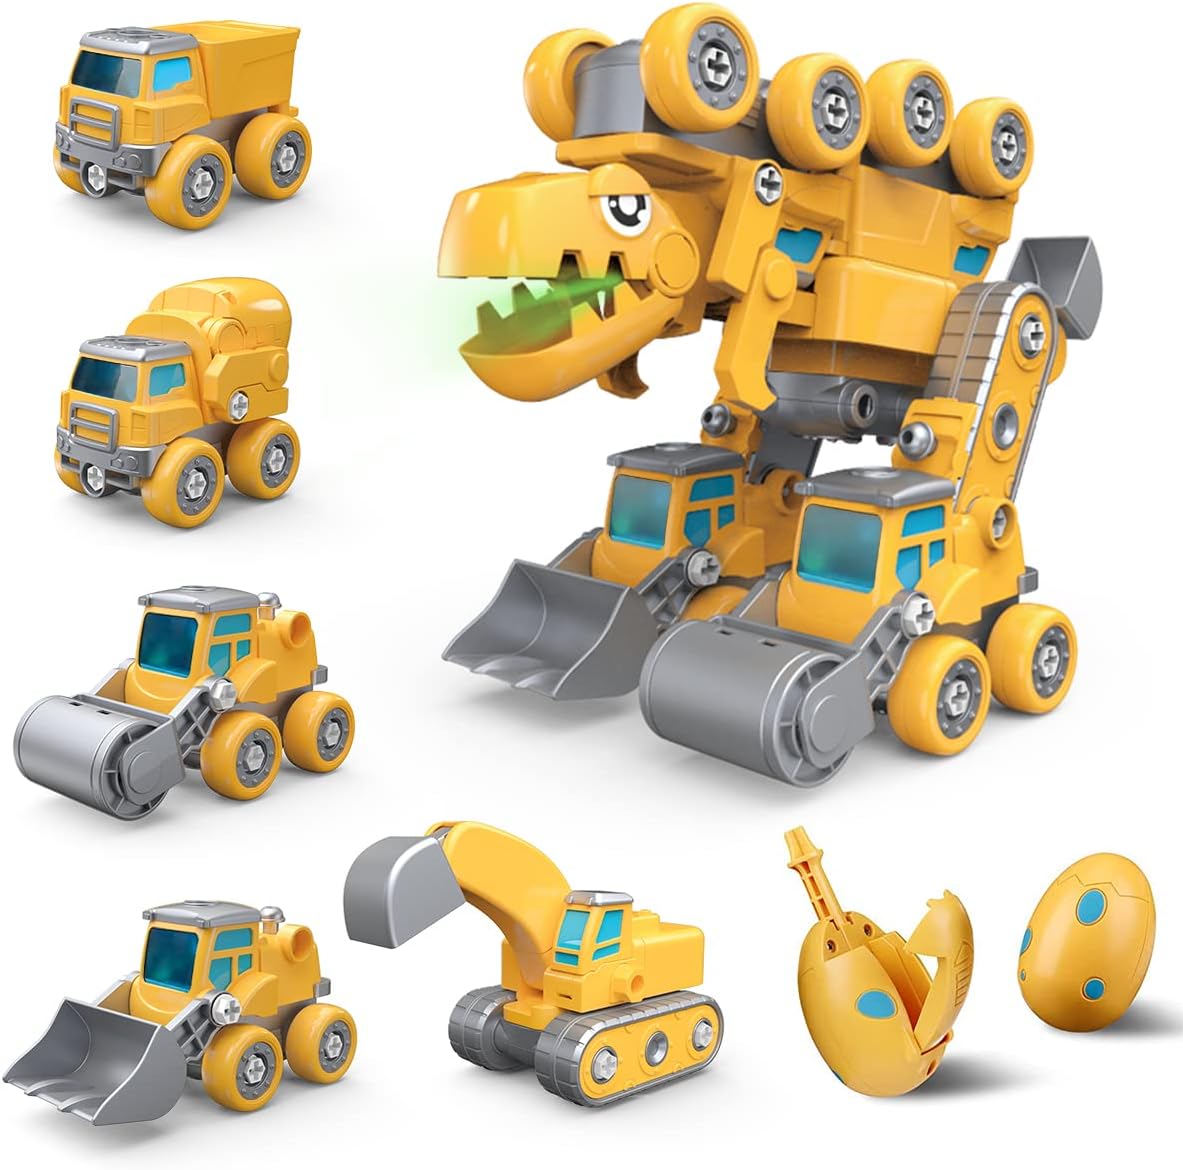 KATTUN 5 in 1 Take Apart Dinosaur Toys, 5 Construction Vehicles Transform into a Big Dinosaur Robot Toys